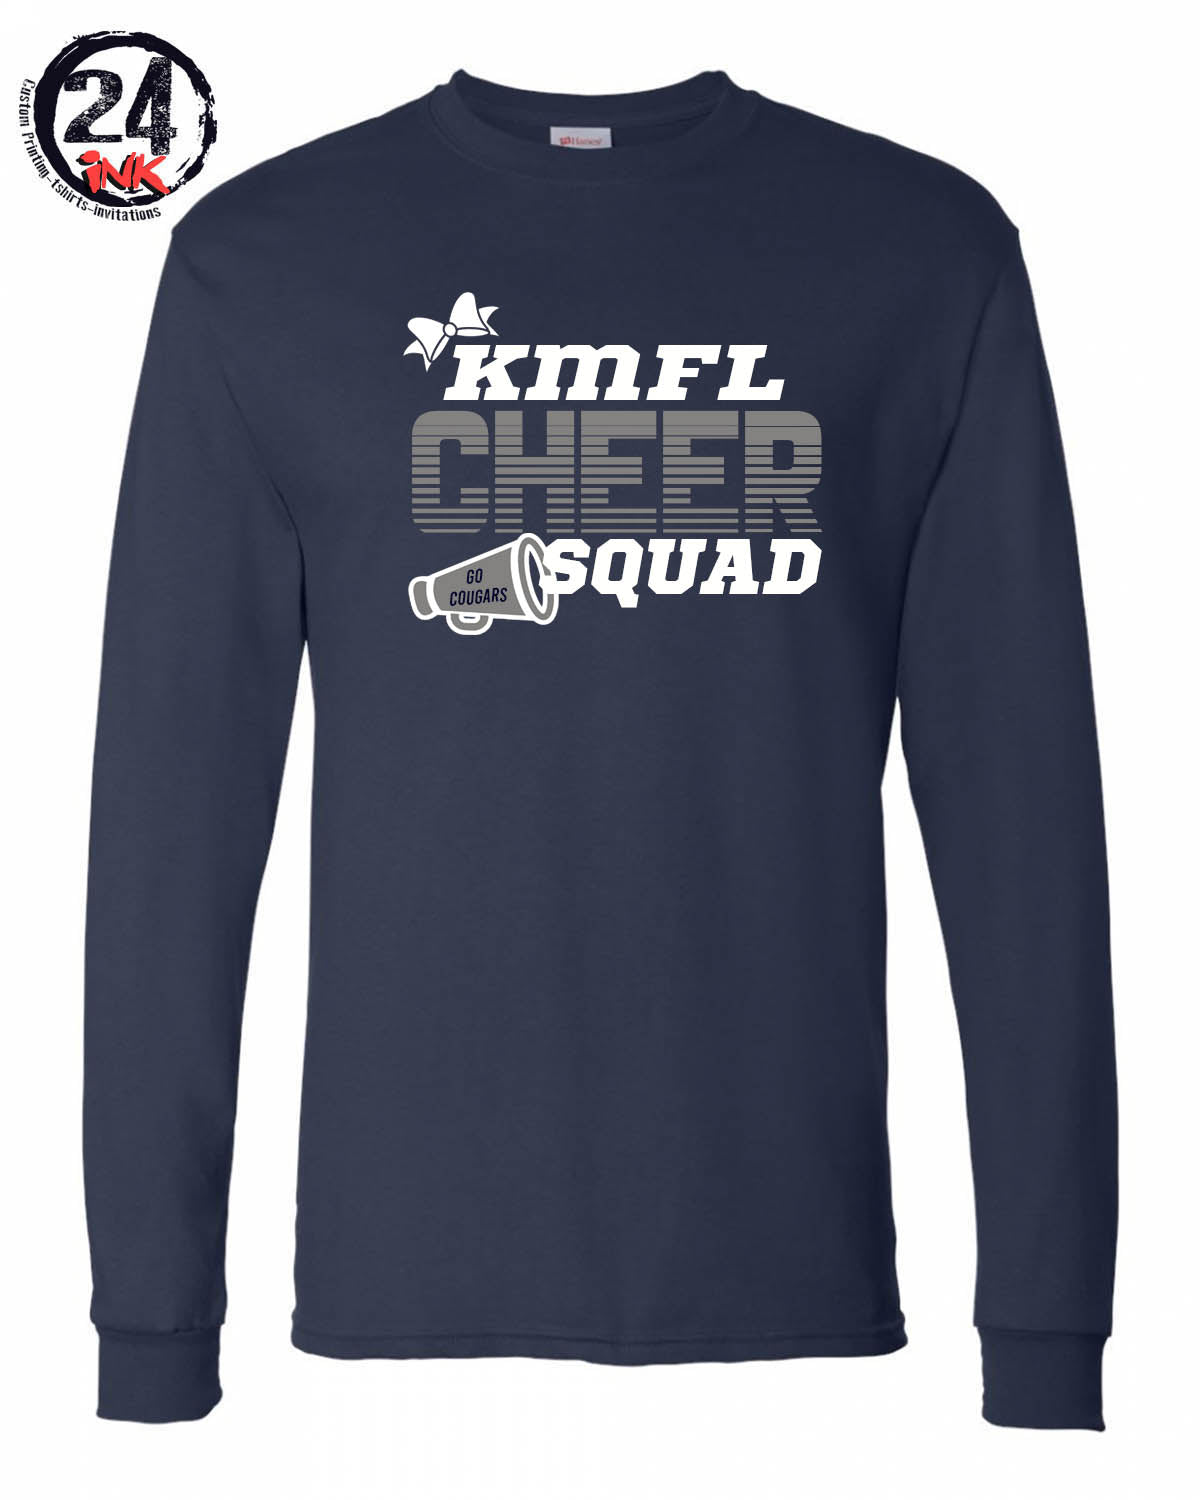 Kmfl Cheer Squad Long Sleeve Shirt